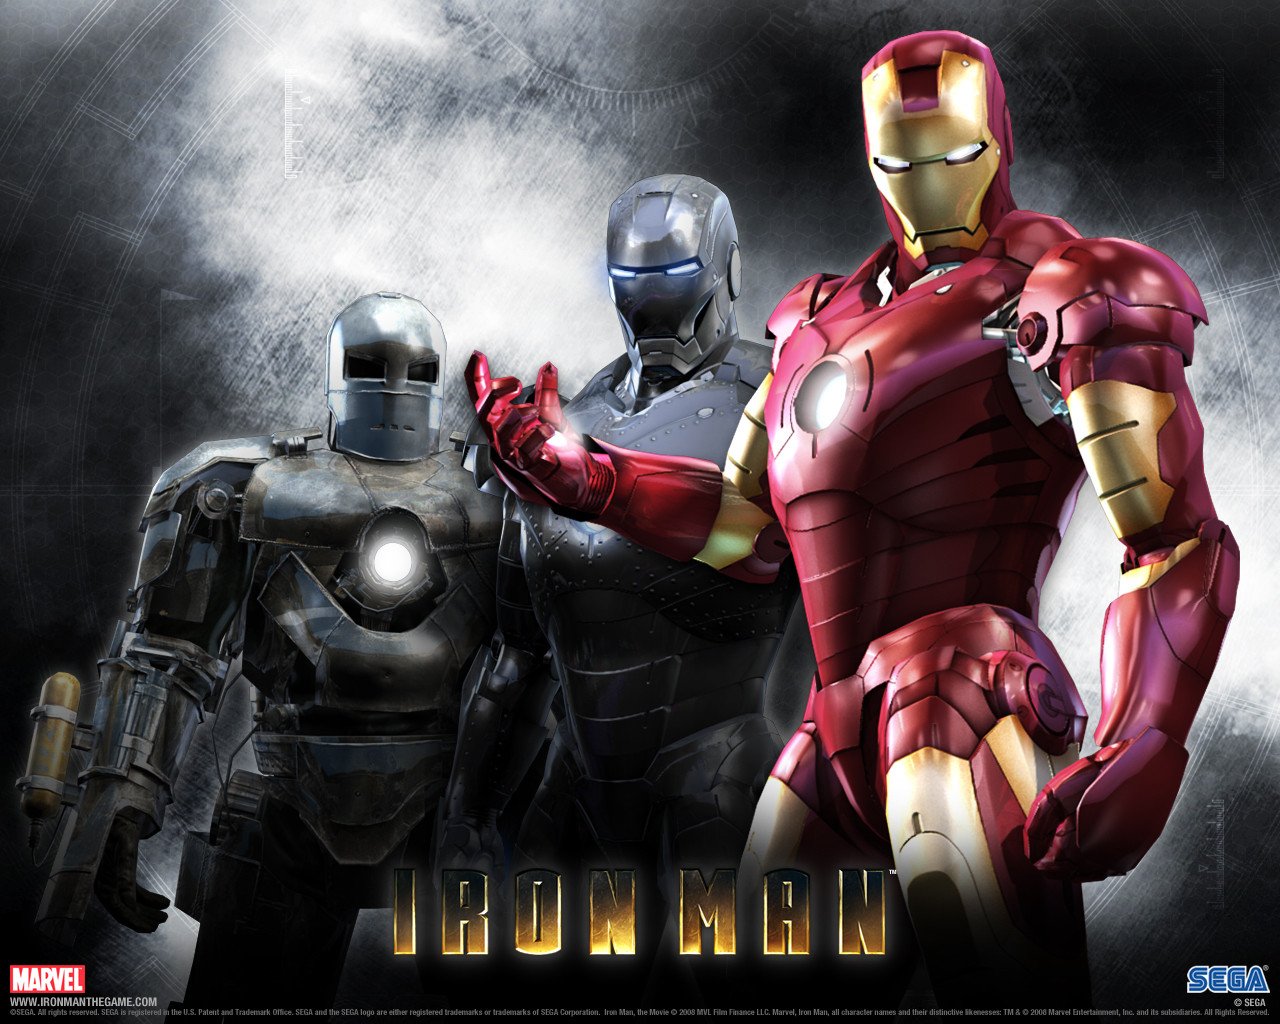  Iron Suit Advance   Iron Man Wallpaper Iron Suit Advance Wallpaper